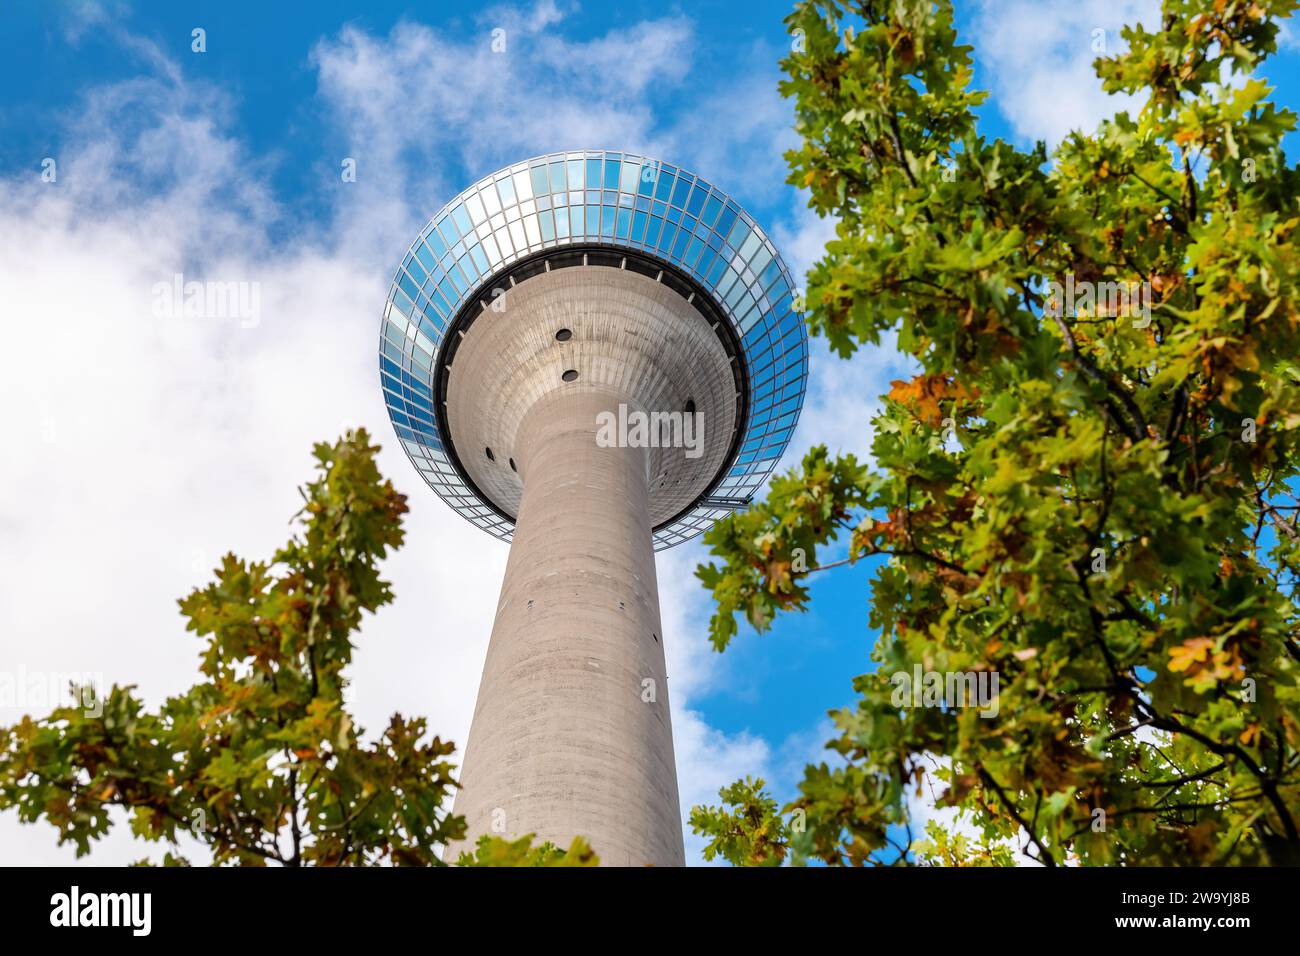 Rheintower against blue sky with clouds in Düsseldorf, Germany Stock Photo